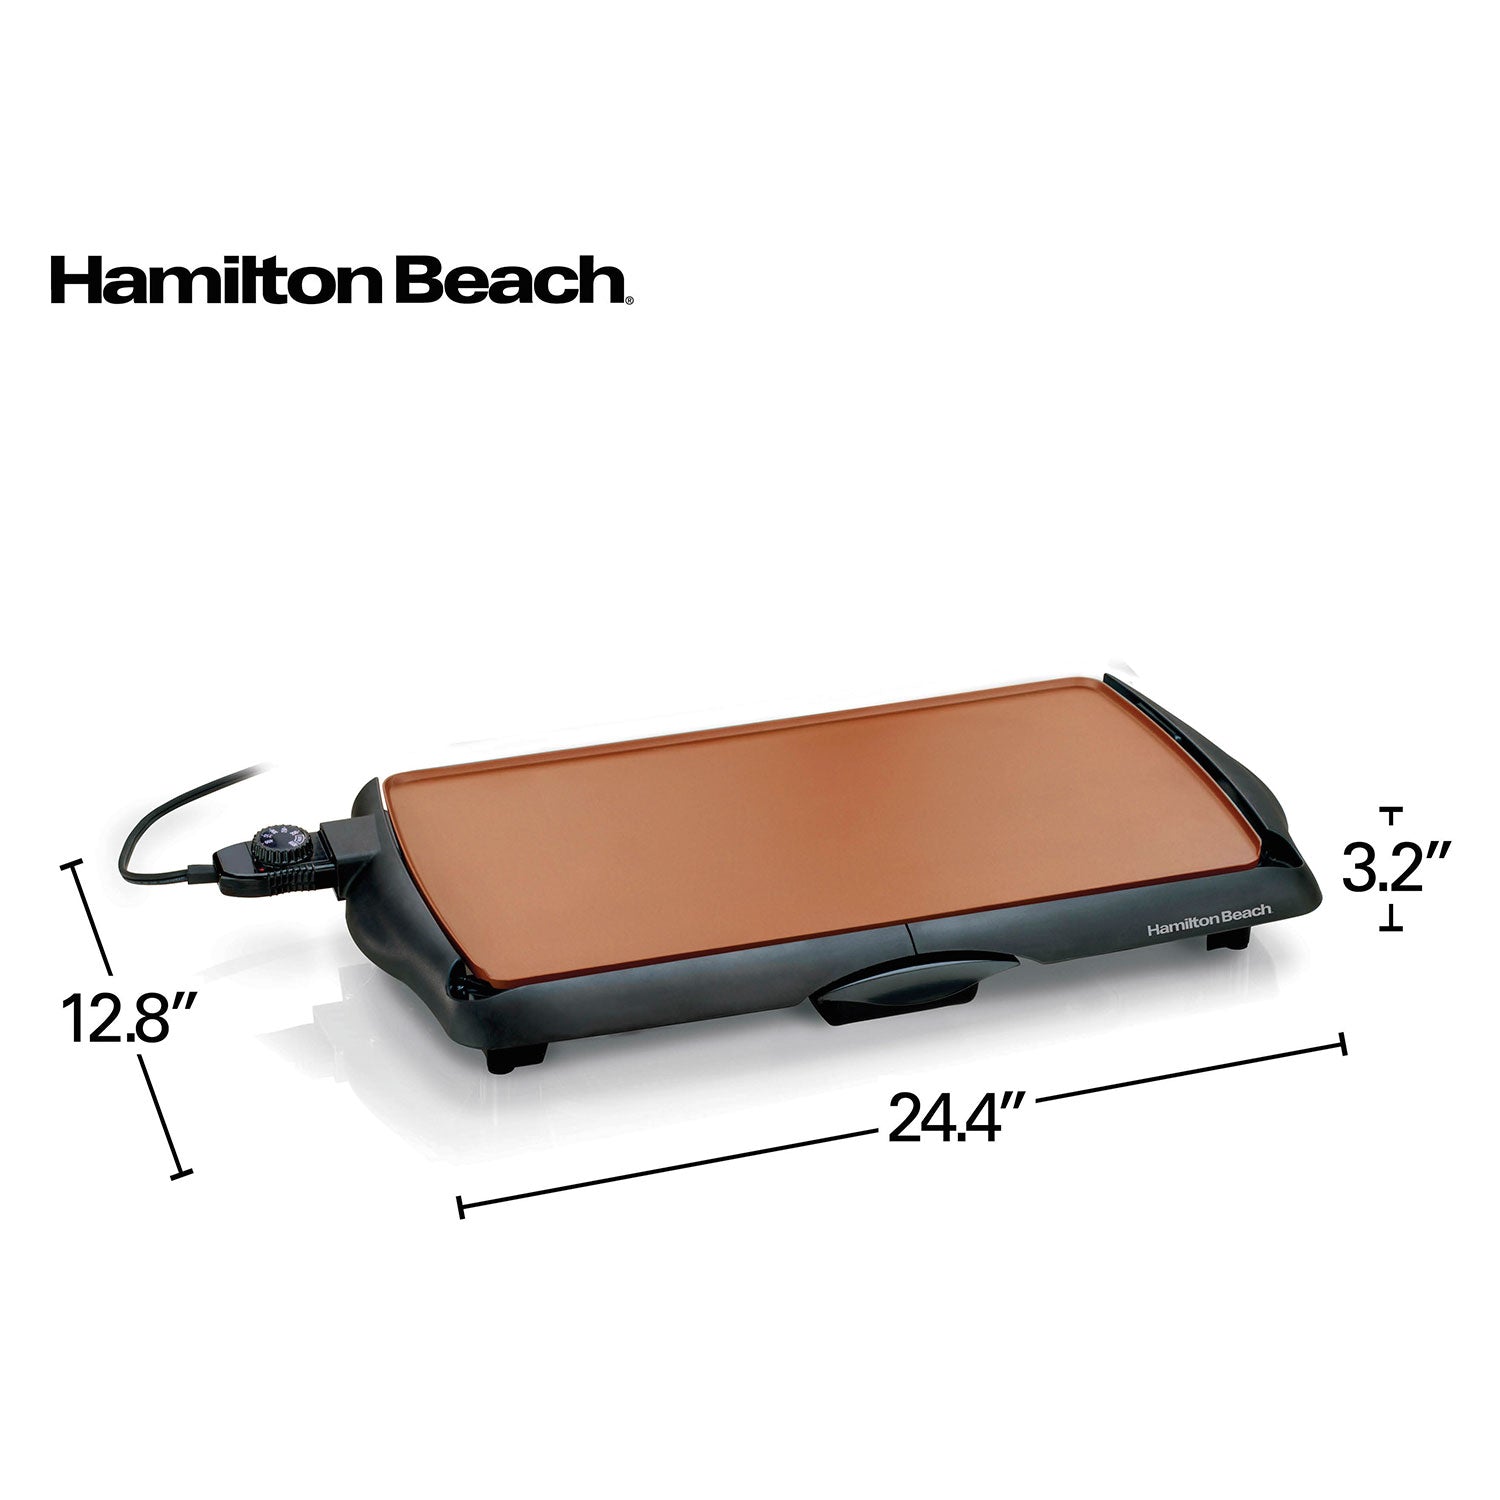 Hamilton Beach Durathon Ceramic Skillet w/ Removable Pan